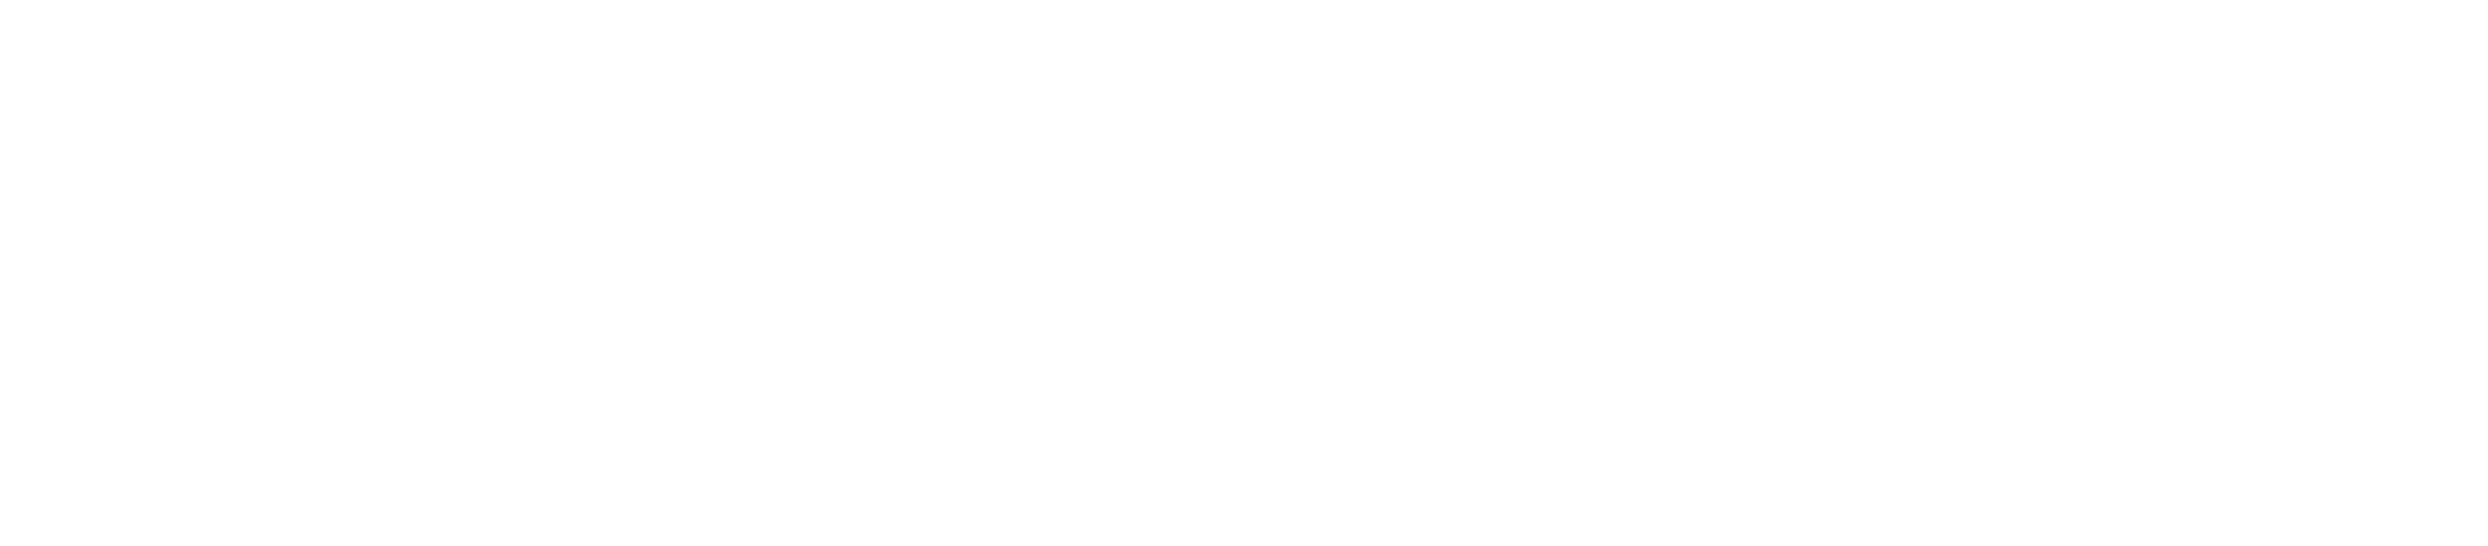 arrowwaste-logo-white